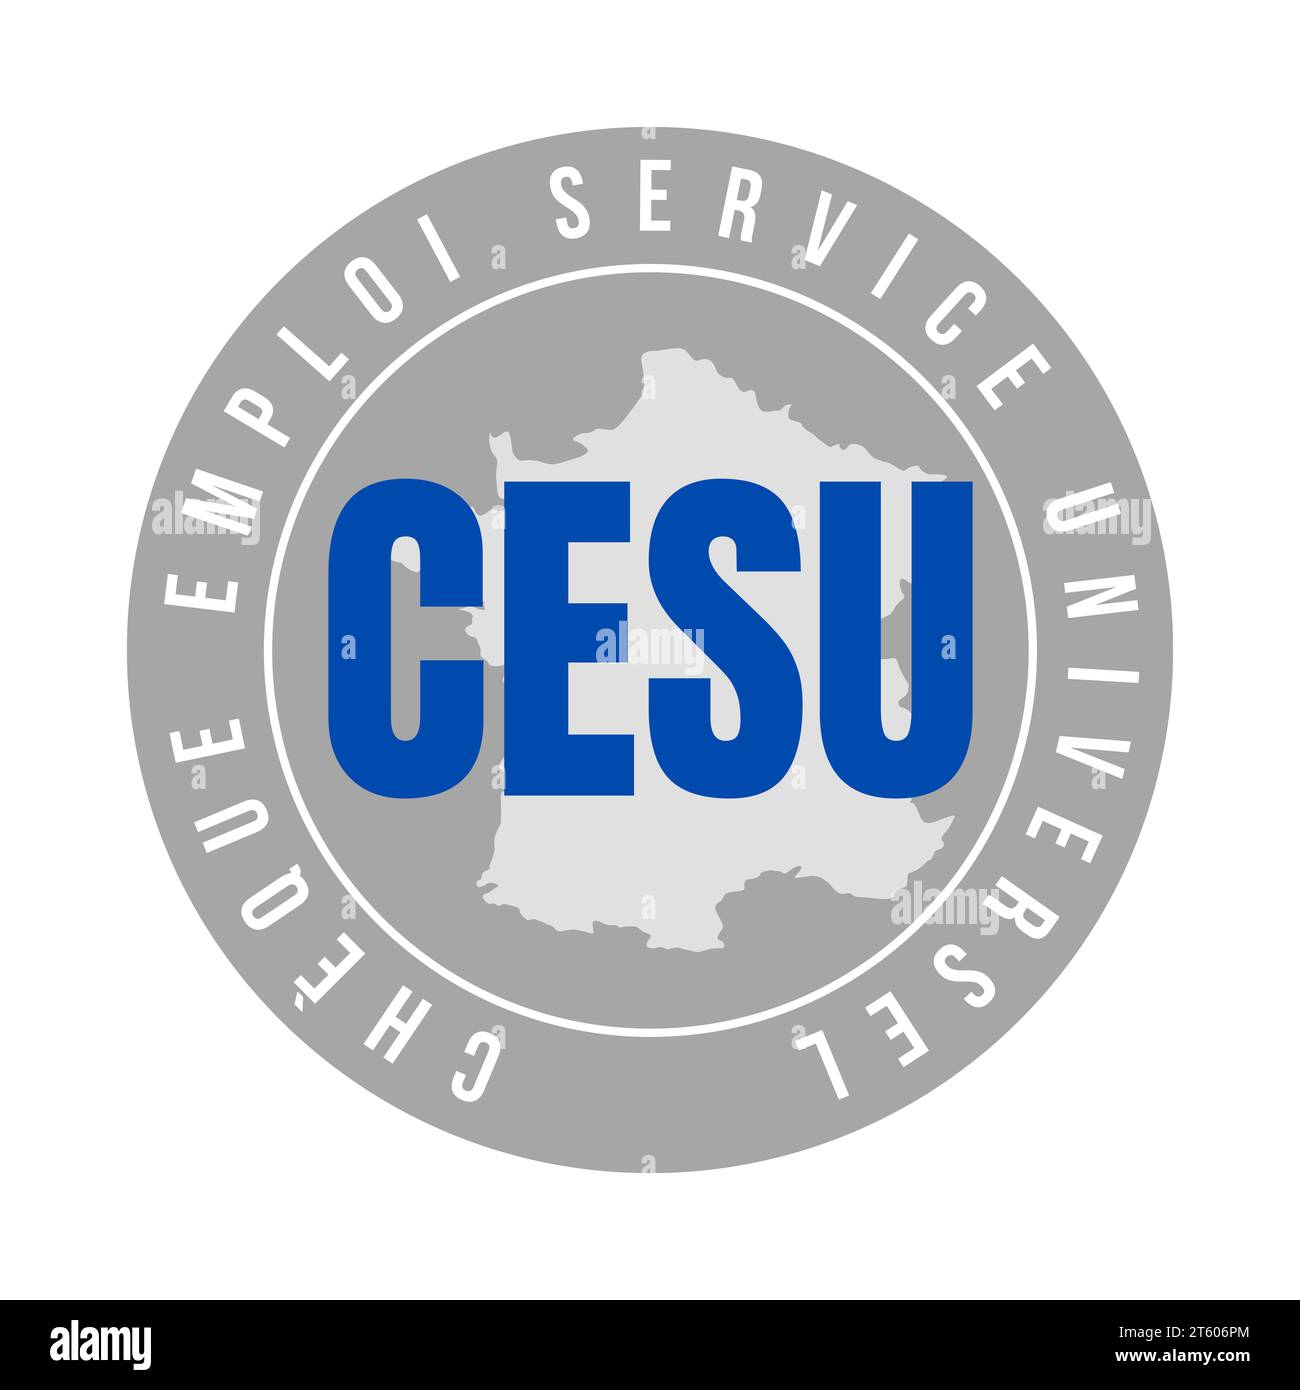 Universal service employment check symbol icon called CESU cheque emploi service universel in French language Stock Photo